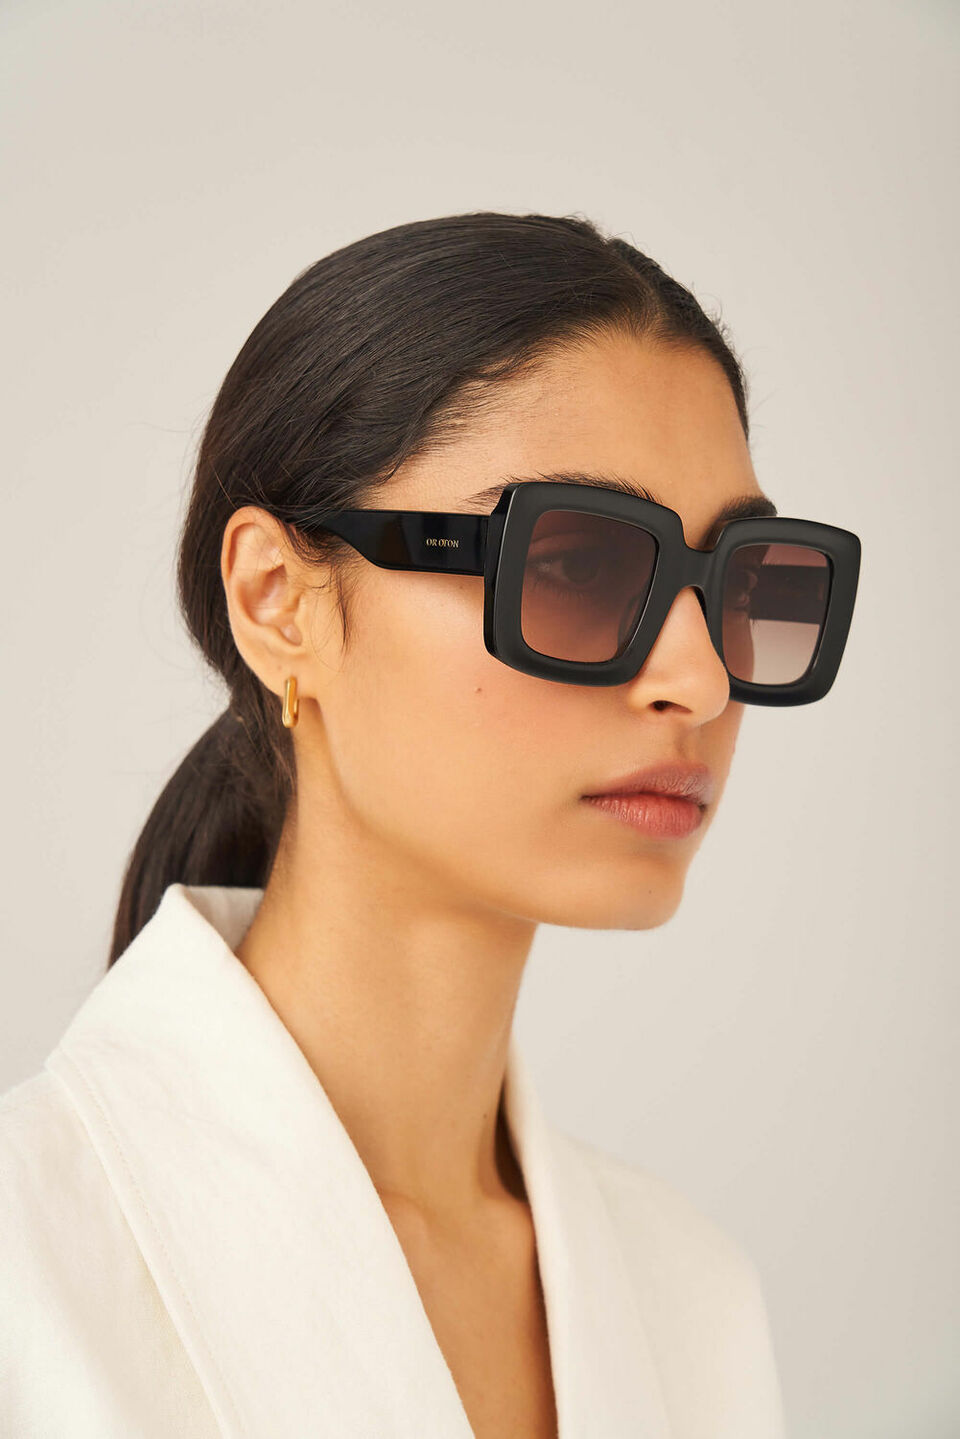 Oroton Dakota Sunglasses for Weekly finds